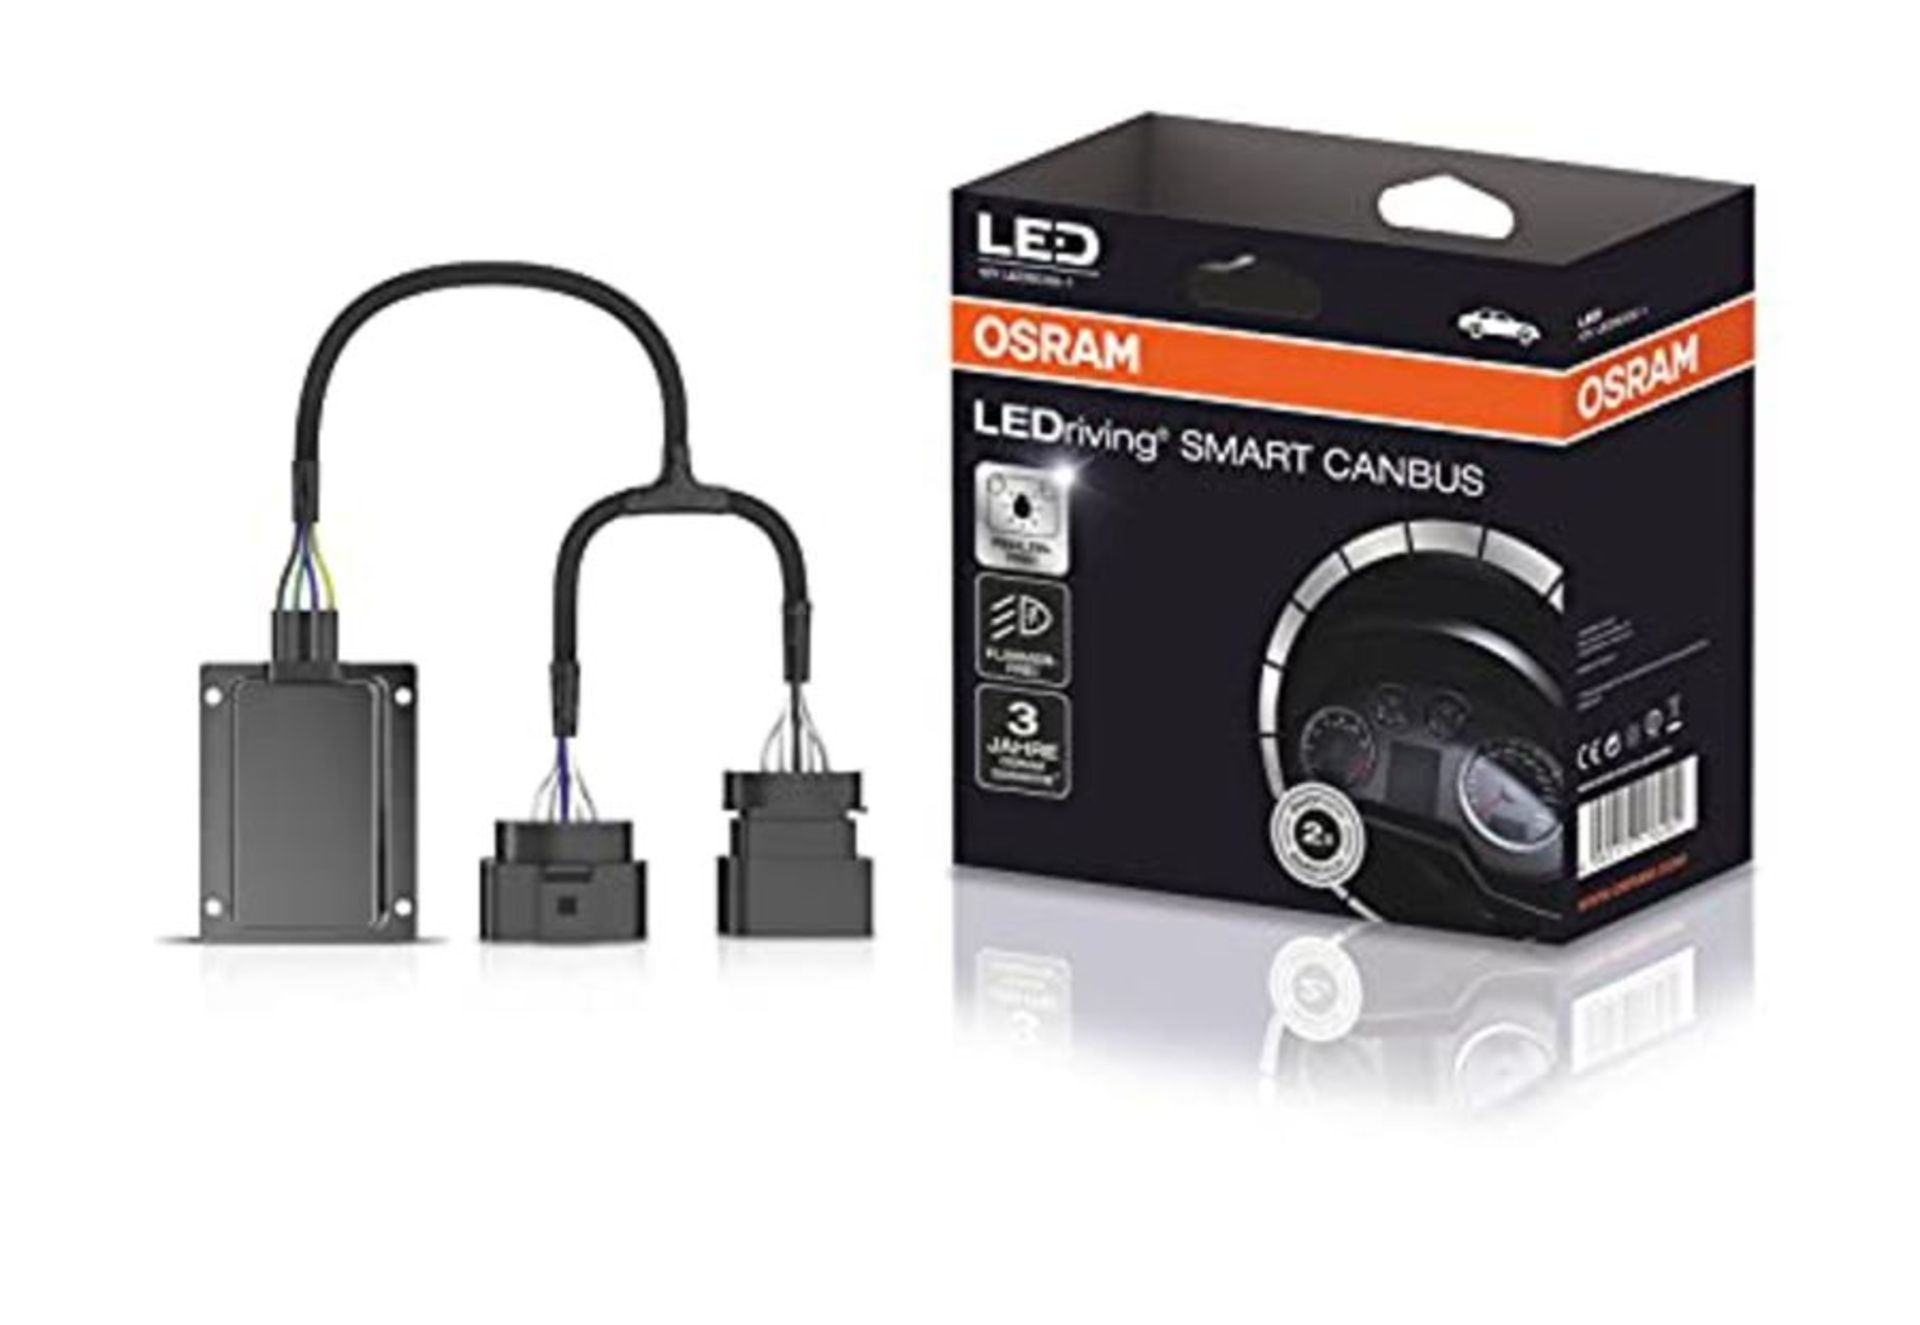 RRP £53.00 OSRAM LEDriving SMART CANBUS, LEDSC02-1, umgeht das Lampenausfallerkennungssystem Retr